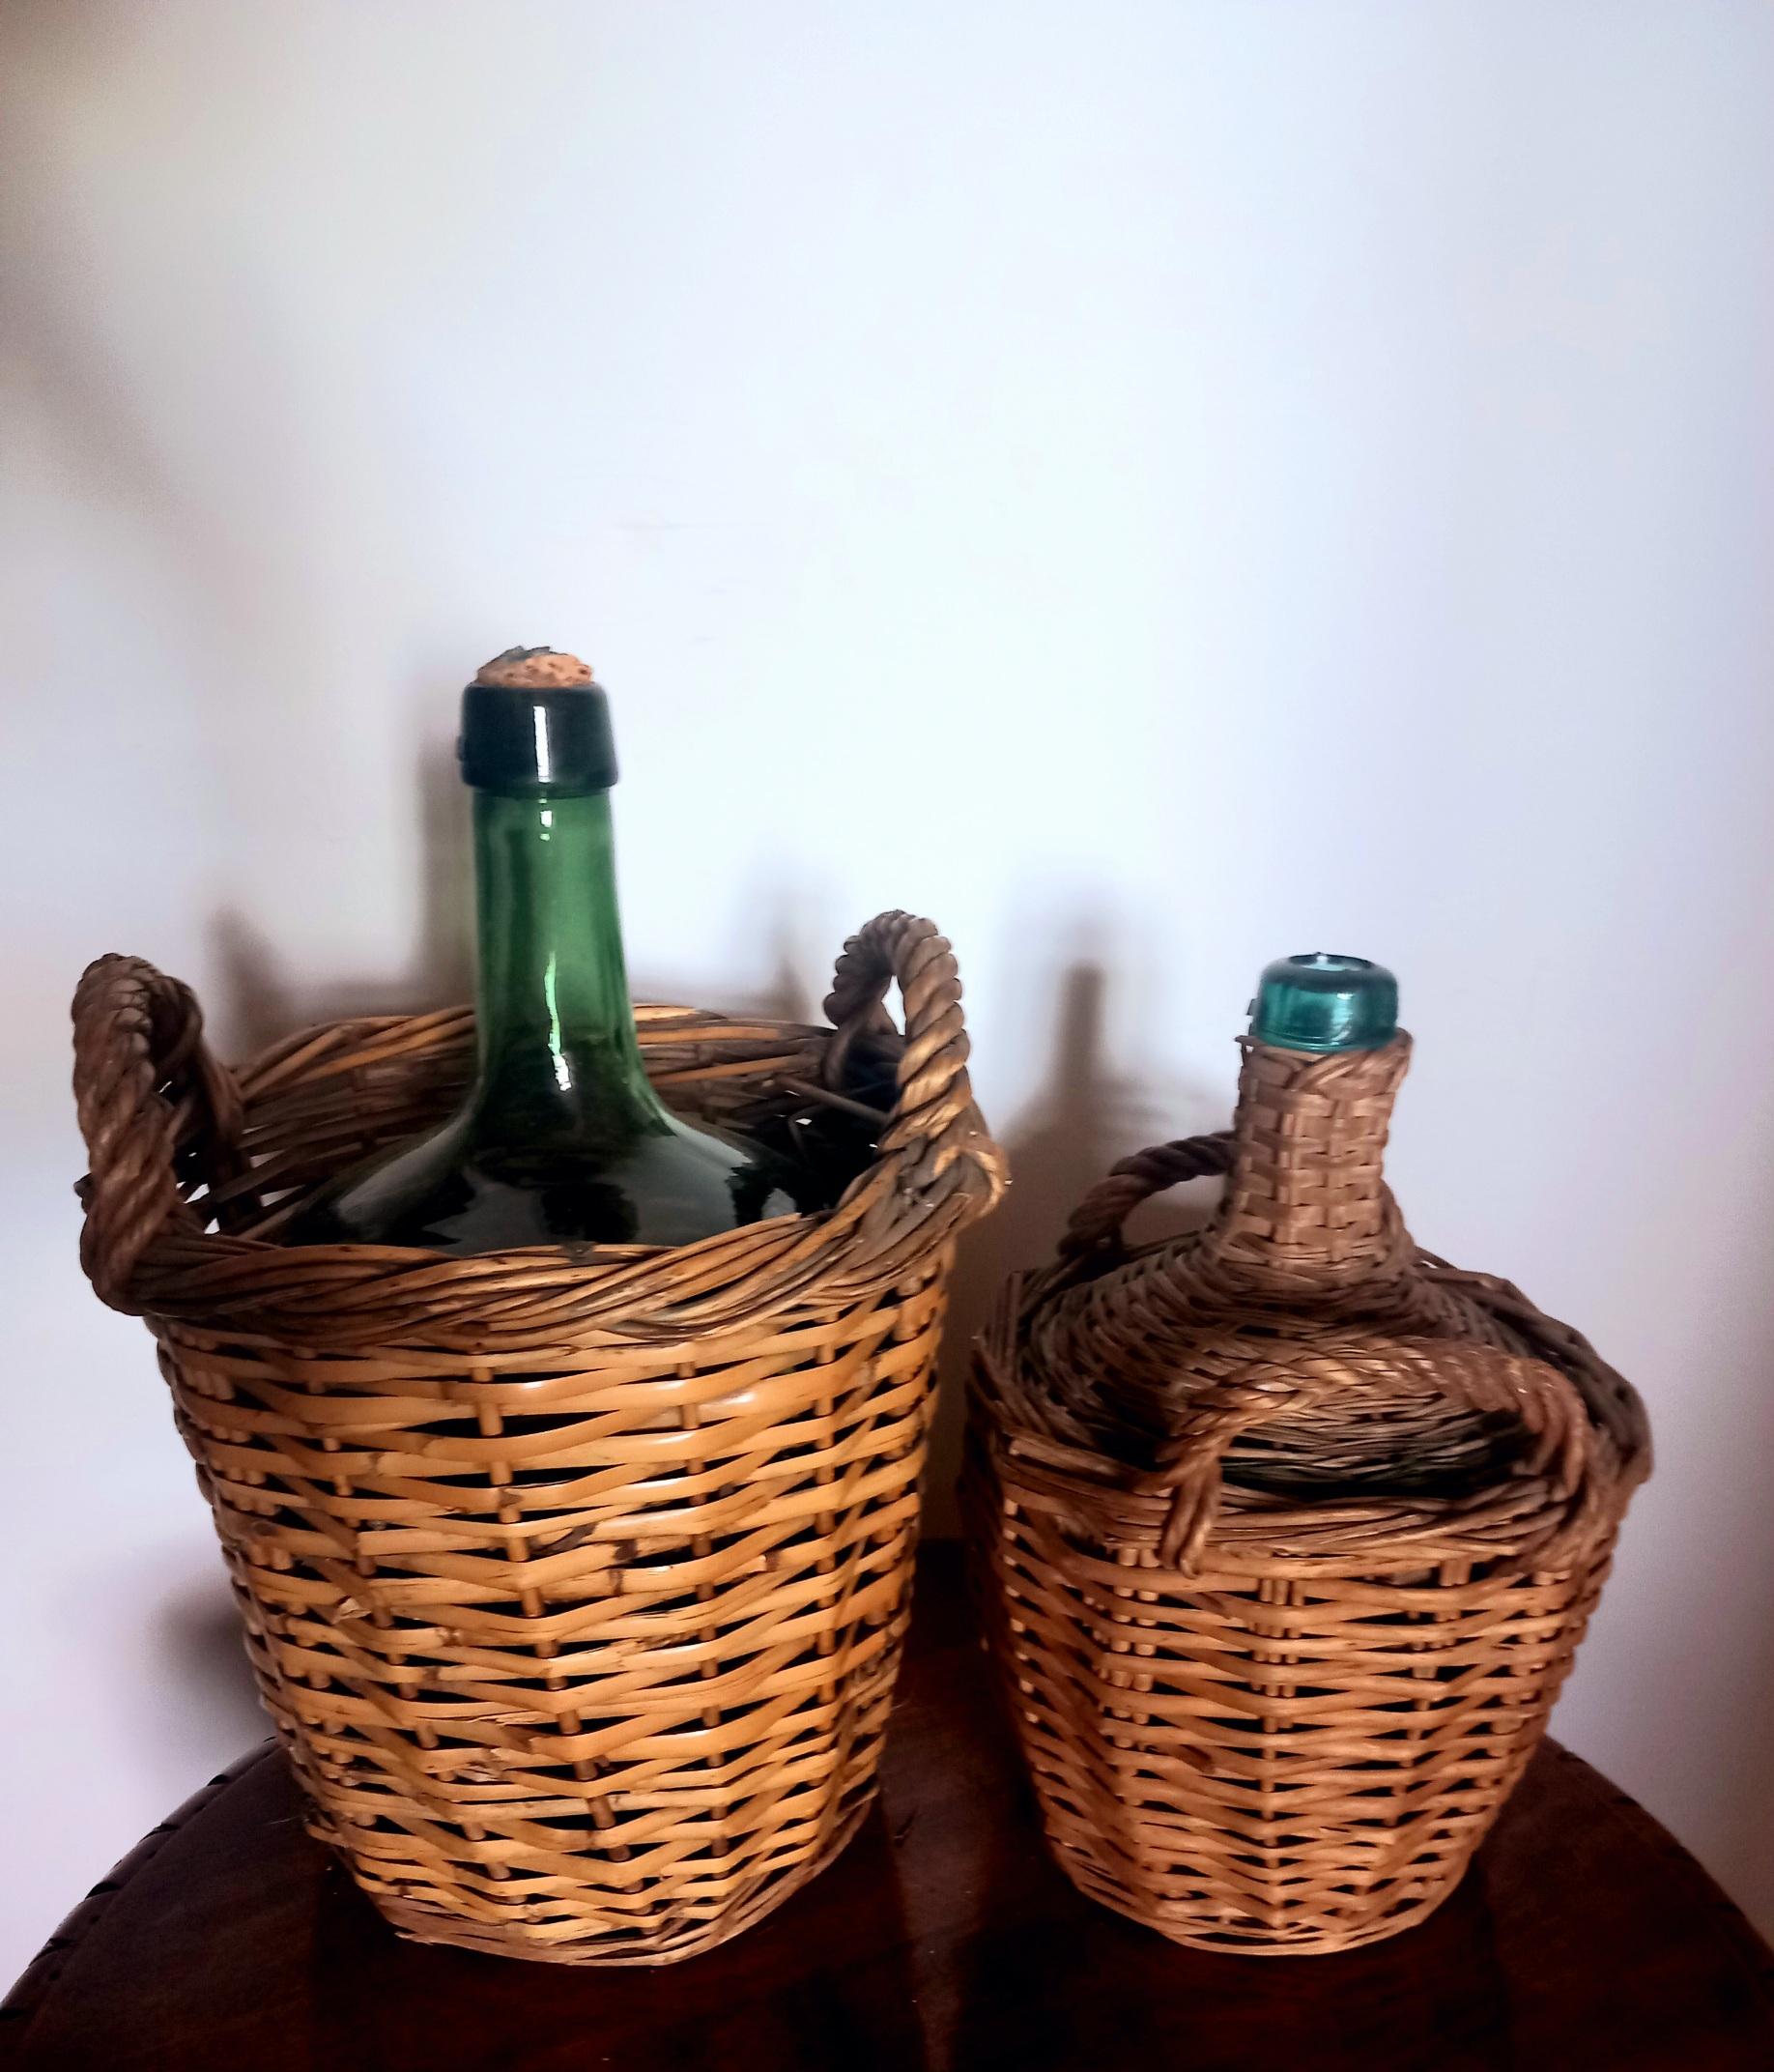  Wine Bottle Coolers Glass Wicker Spain Early 20th Century For Sale 1